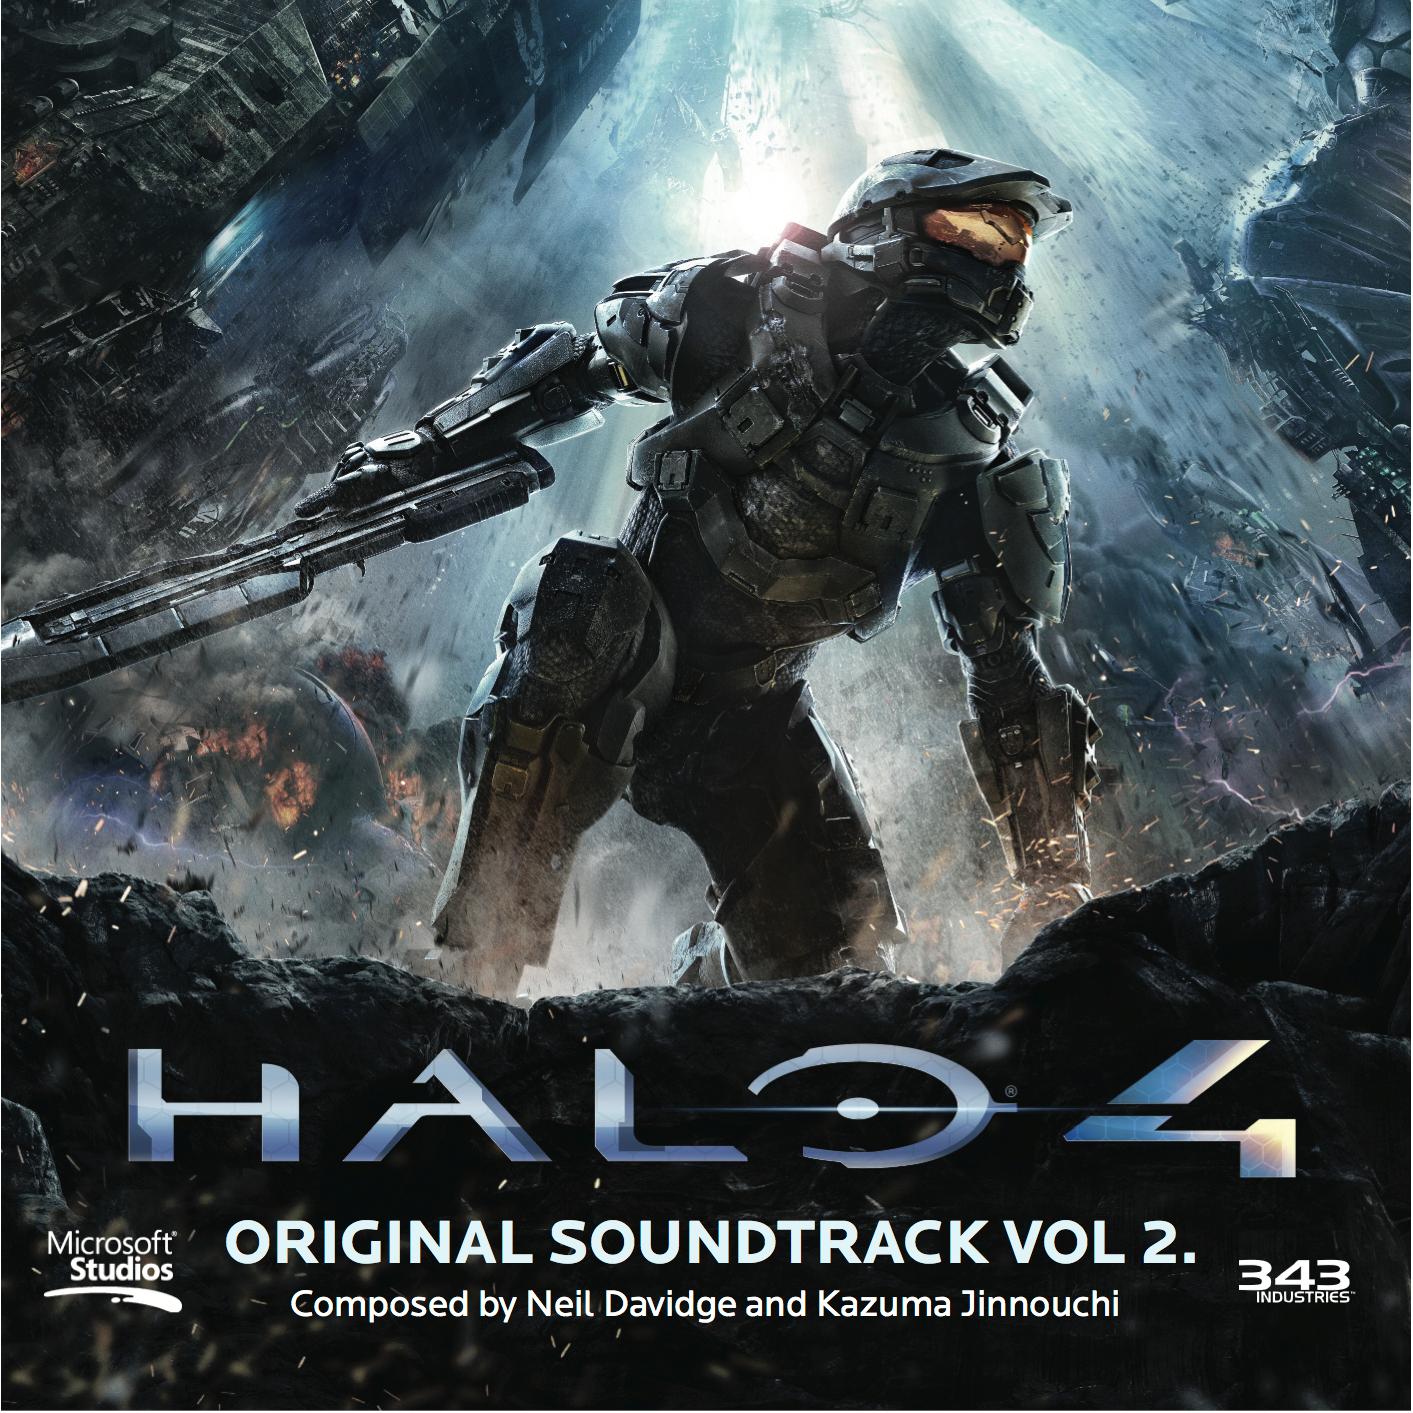 Halo 4 Original Soundtrack Vol. 2